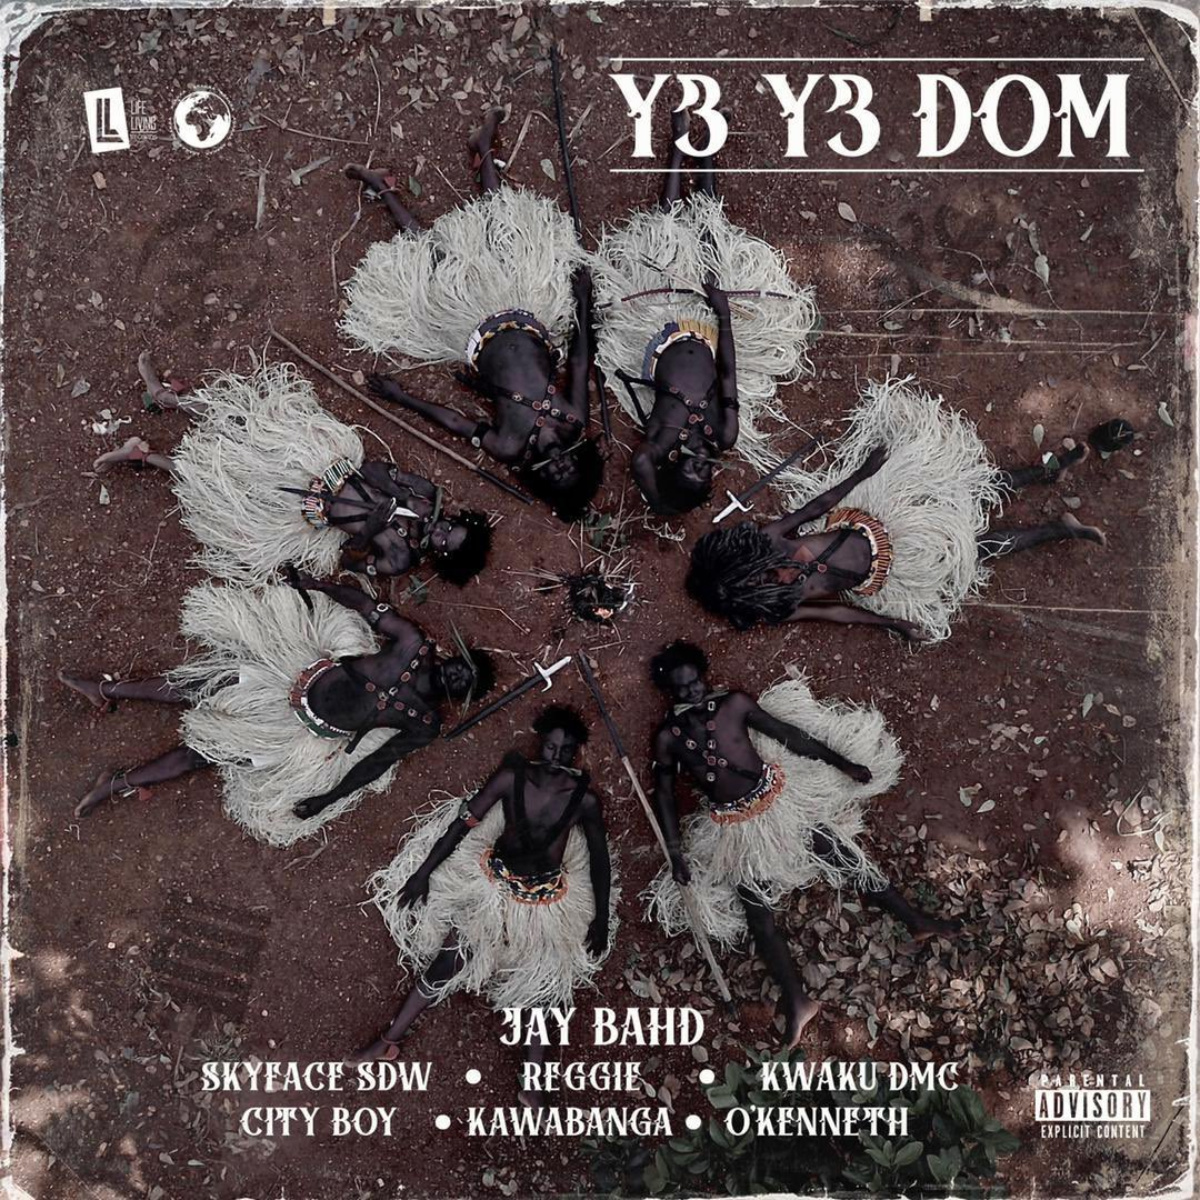 Yɛ Yɛ Dom by Jay Bahd feat. Skyface SDW, Reggie, Kwaku DMC, City Boy, Kawabanga & O'Kenneth